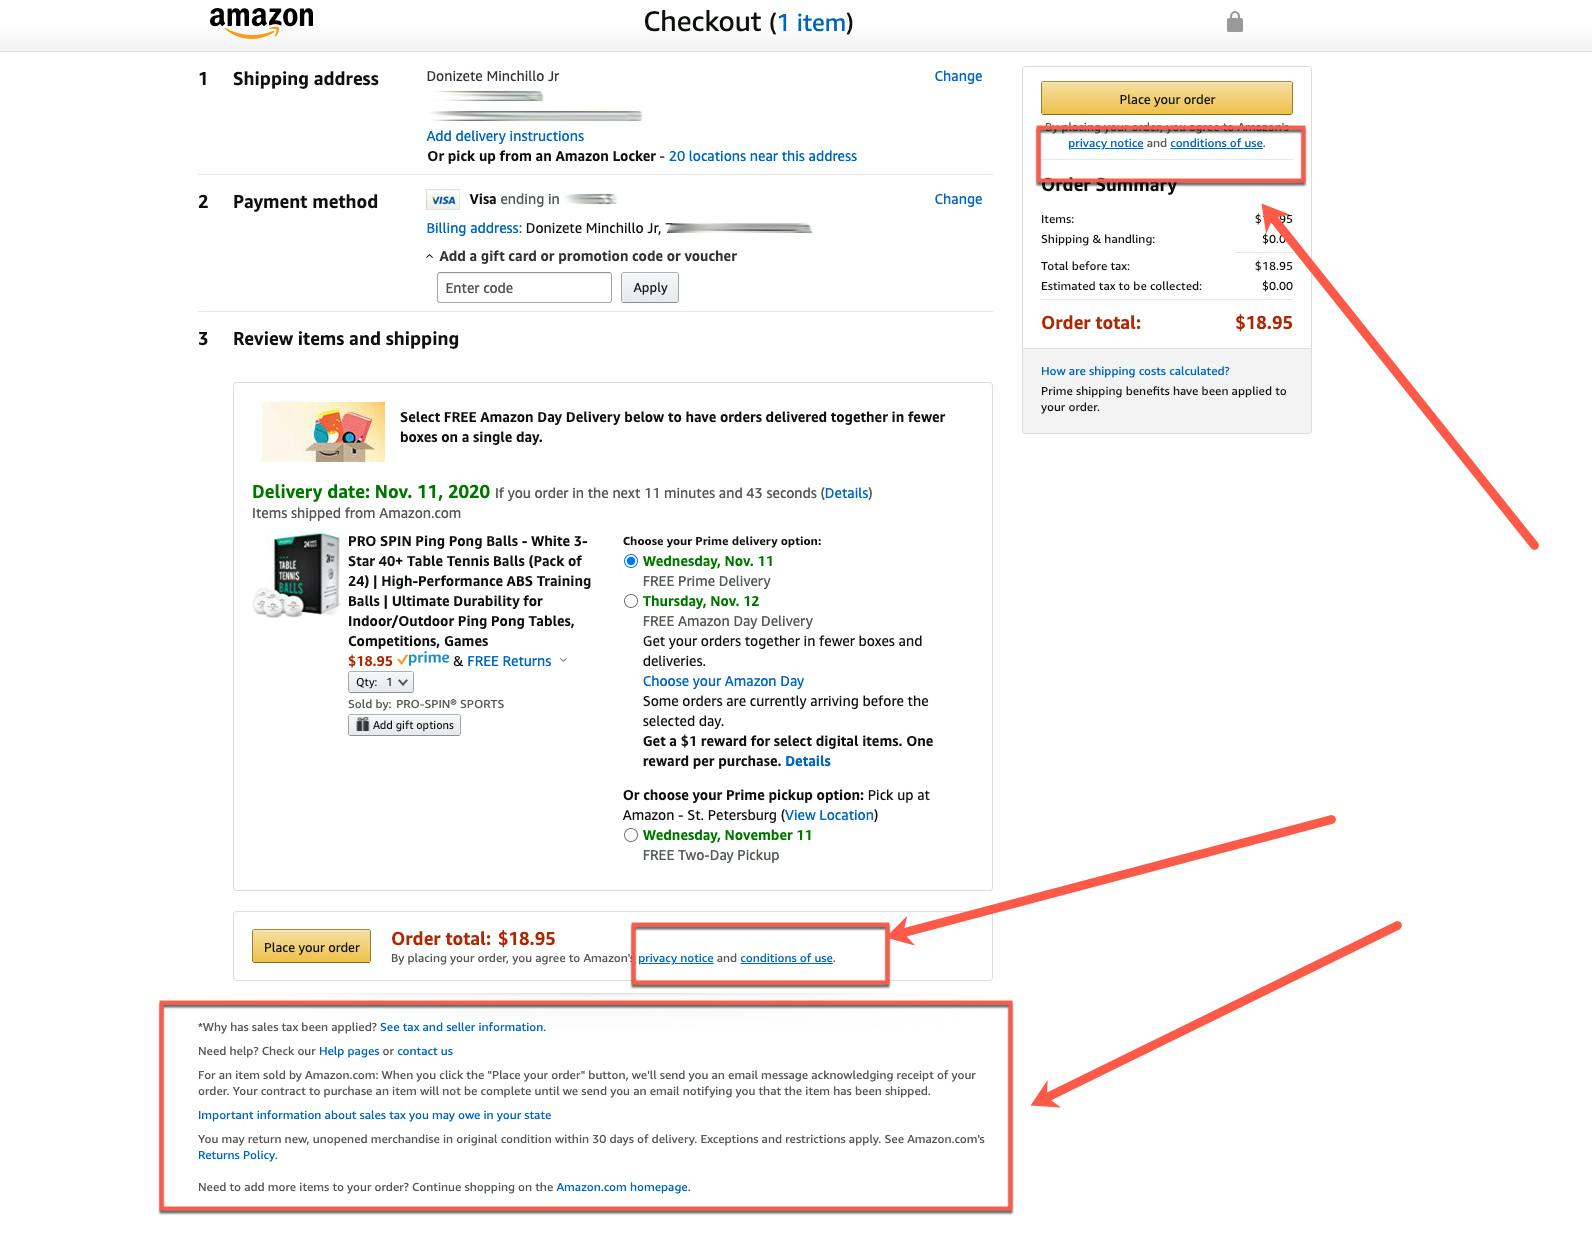 Screenshot of Amazon checkout page